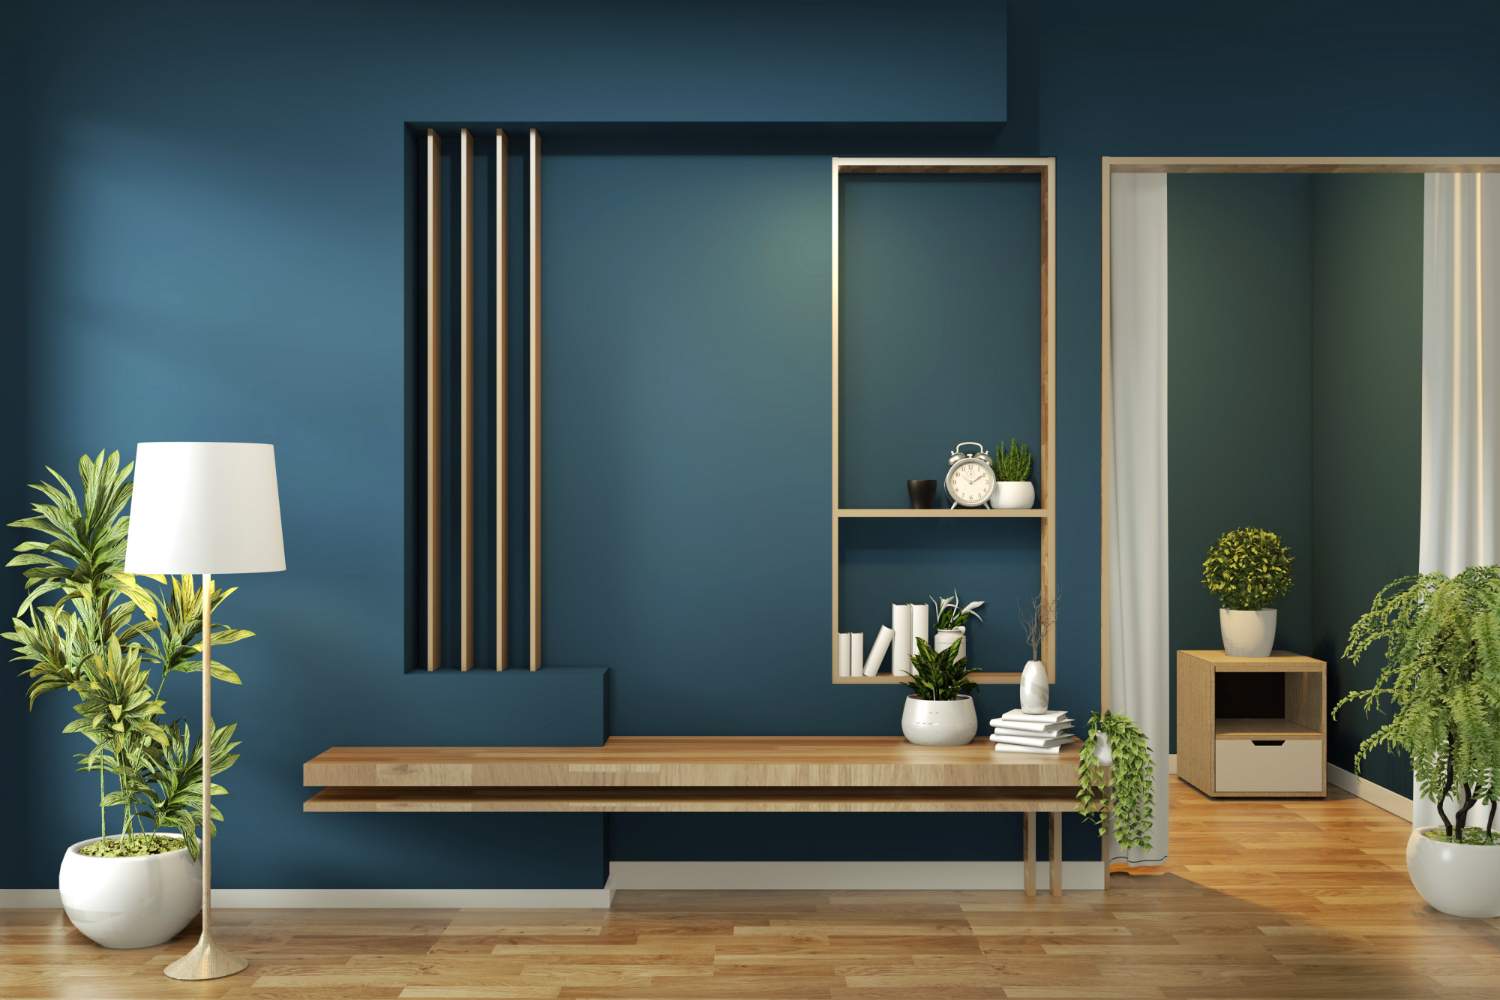 cabinet-mock-up-room-dark-blue-floor-wooden-minimal-design-3d-rendering